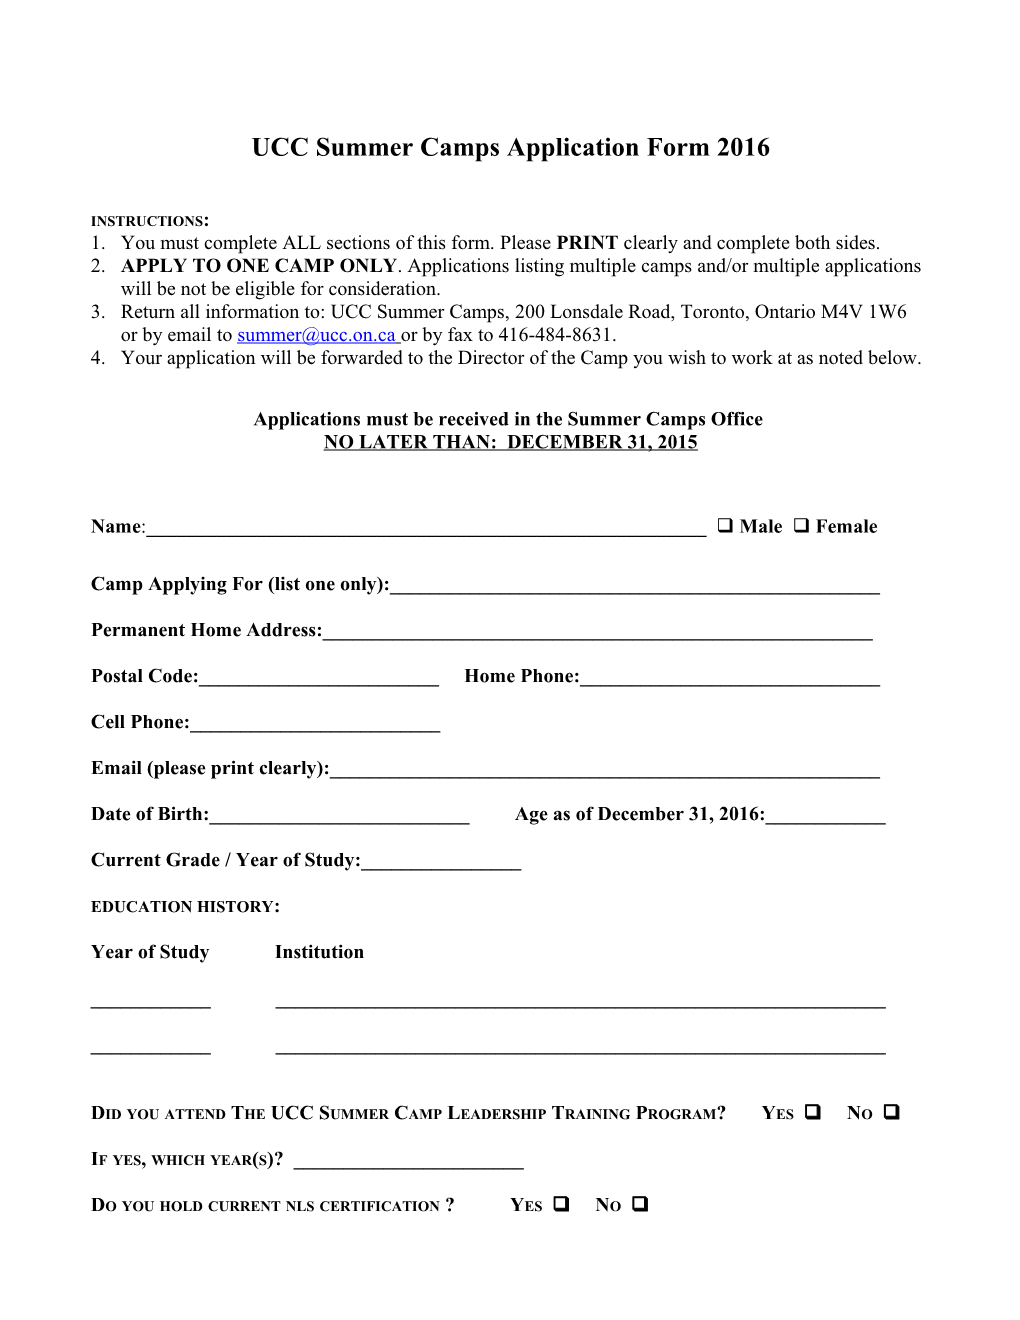 UCC Summer Programs Application Form